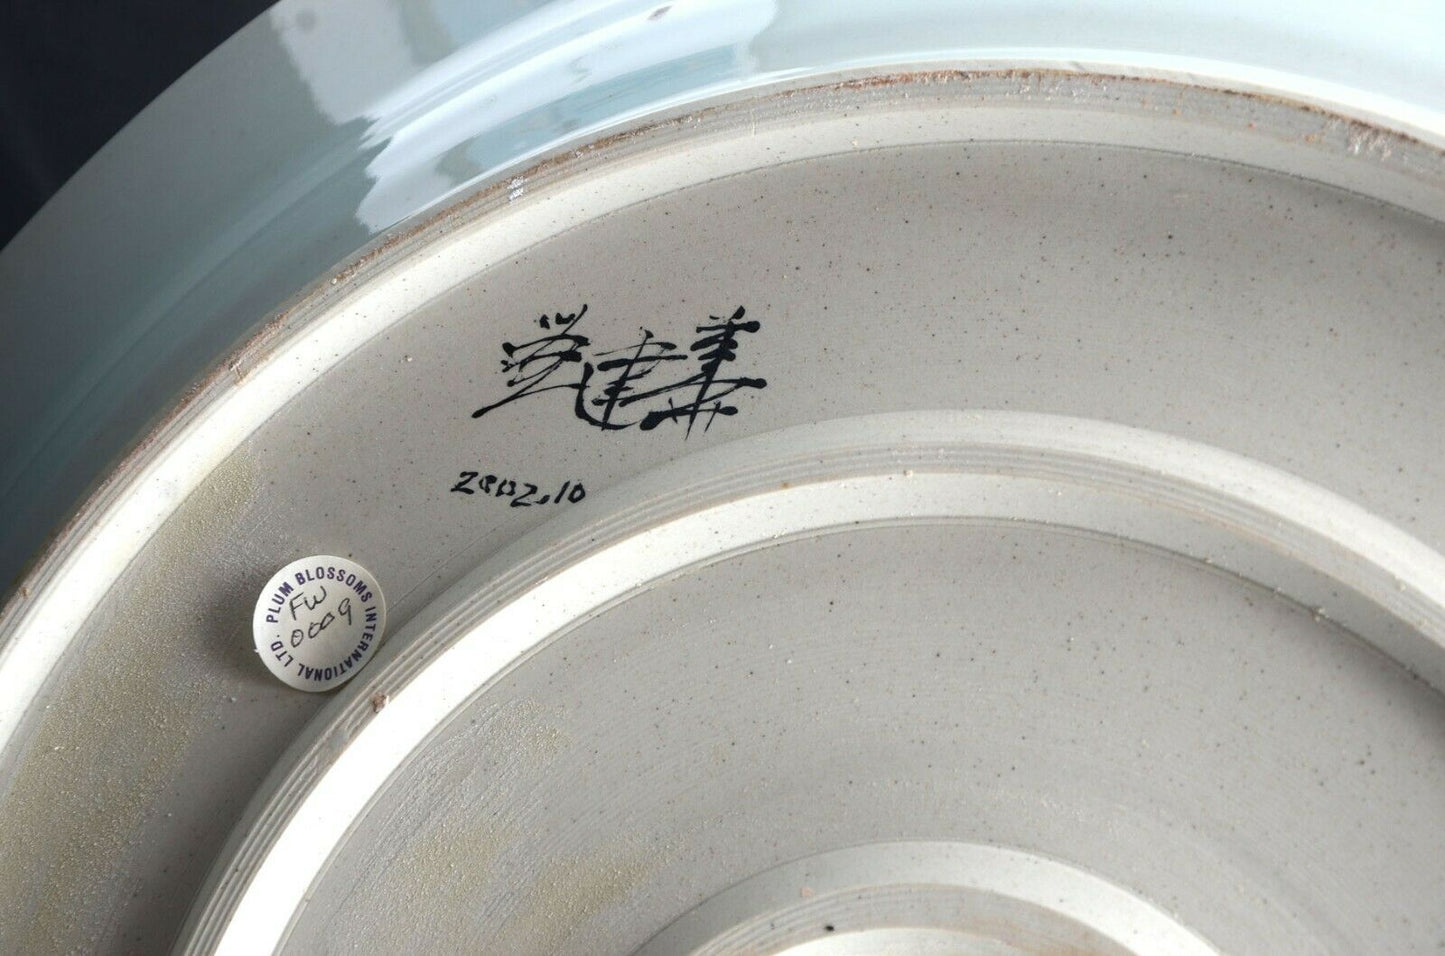 LIU JIANHUA "Games" Signed 2002 Ceramic Sculpture 21 1/2 Inch Charger